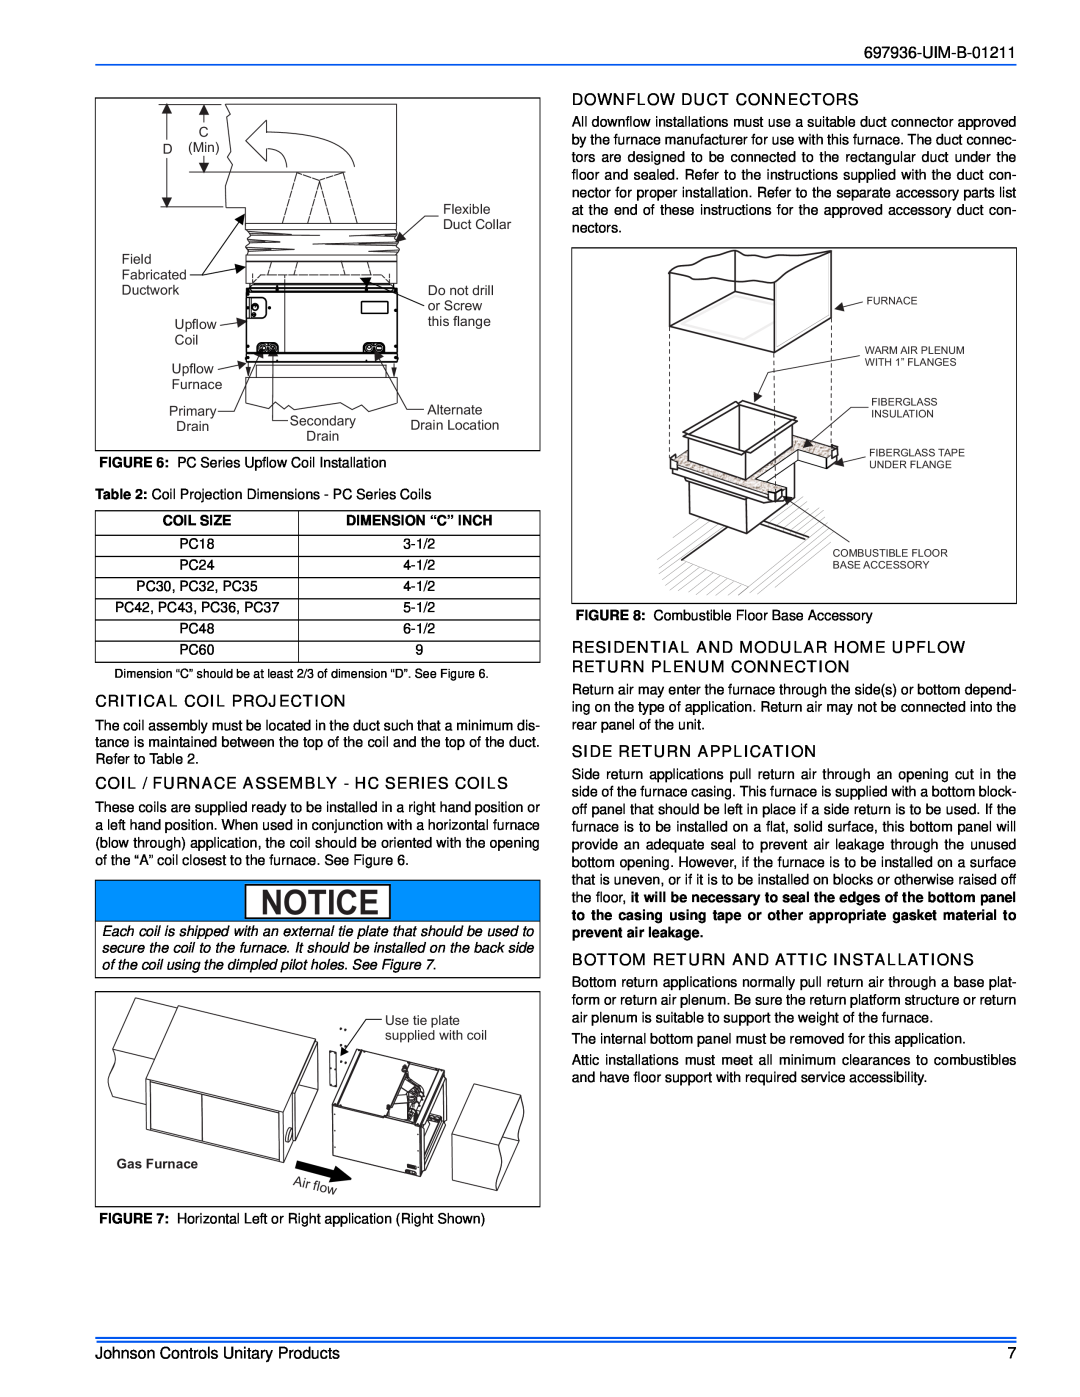 Johnson Controls TM9X*MP UIM-B-01211, Downflow Duct Connectors, Critical Coil Projection, Side Return Application 